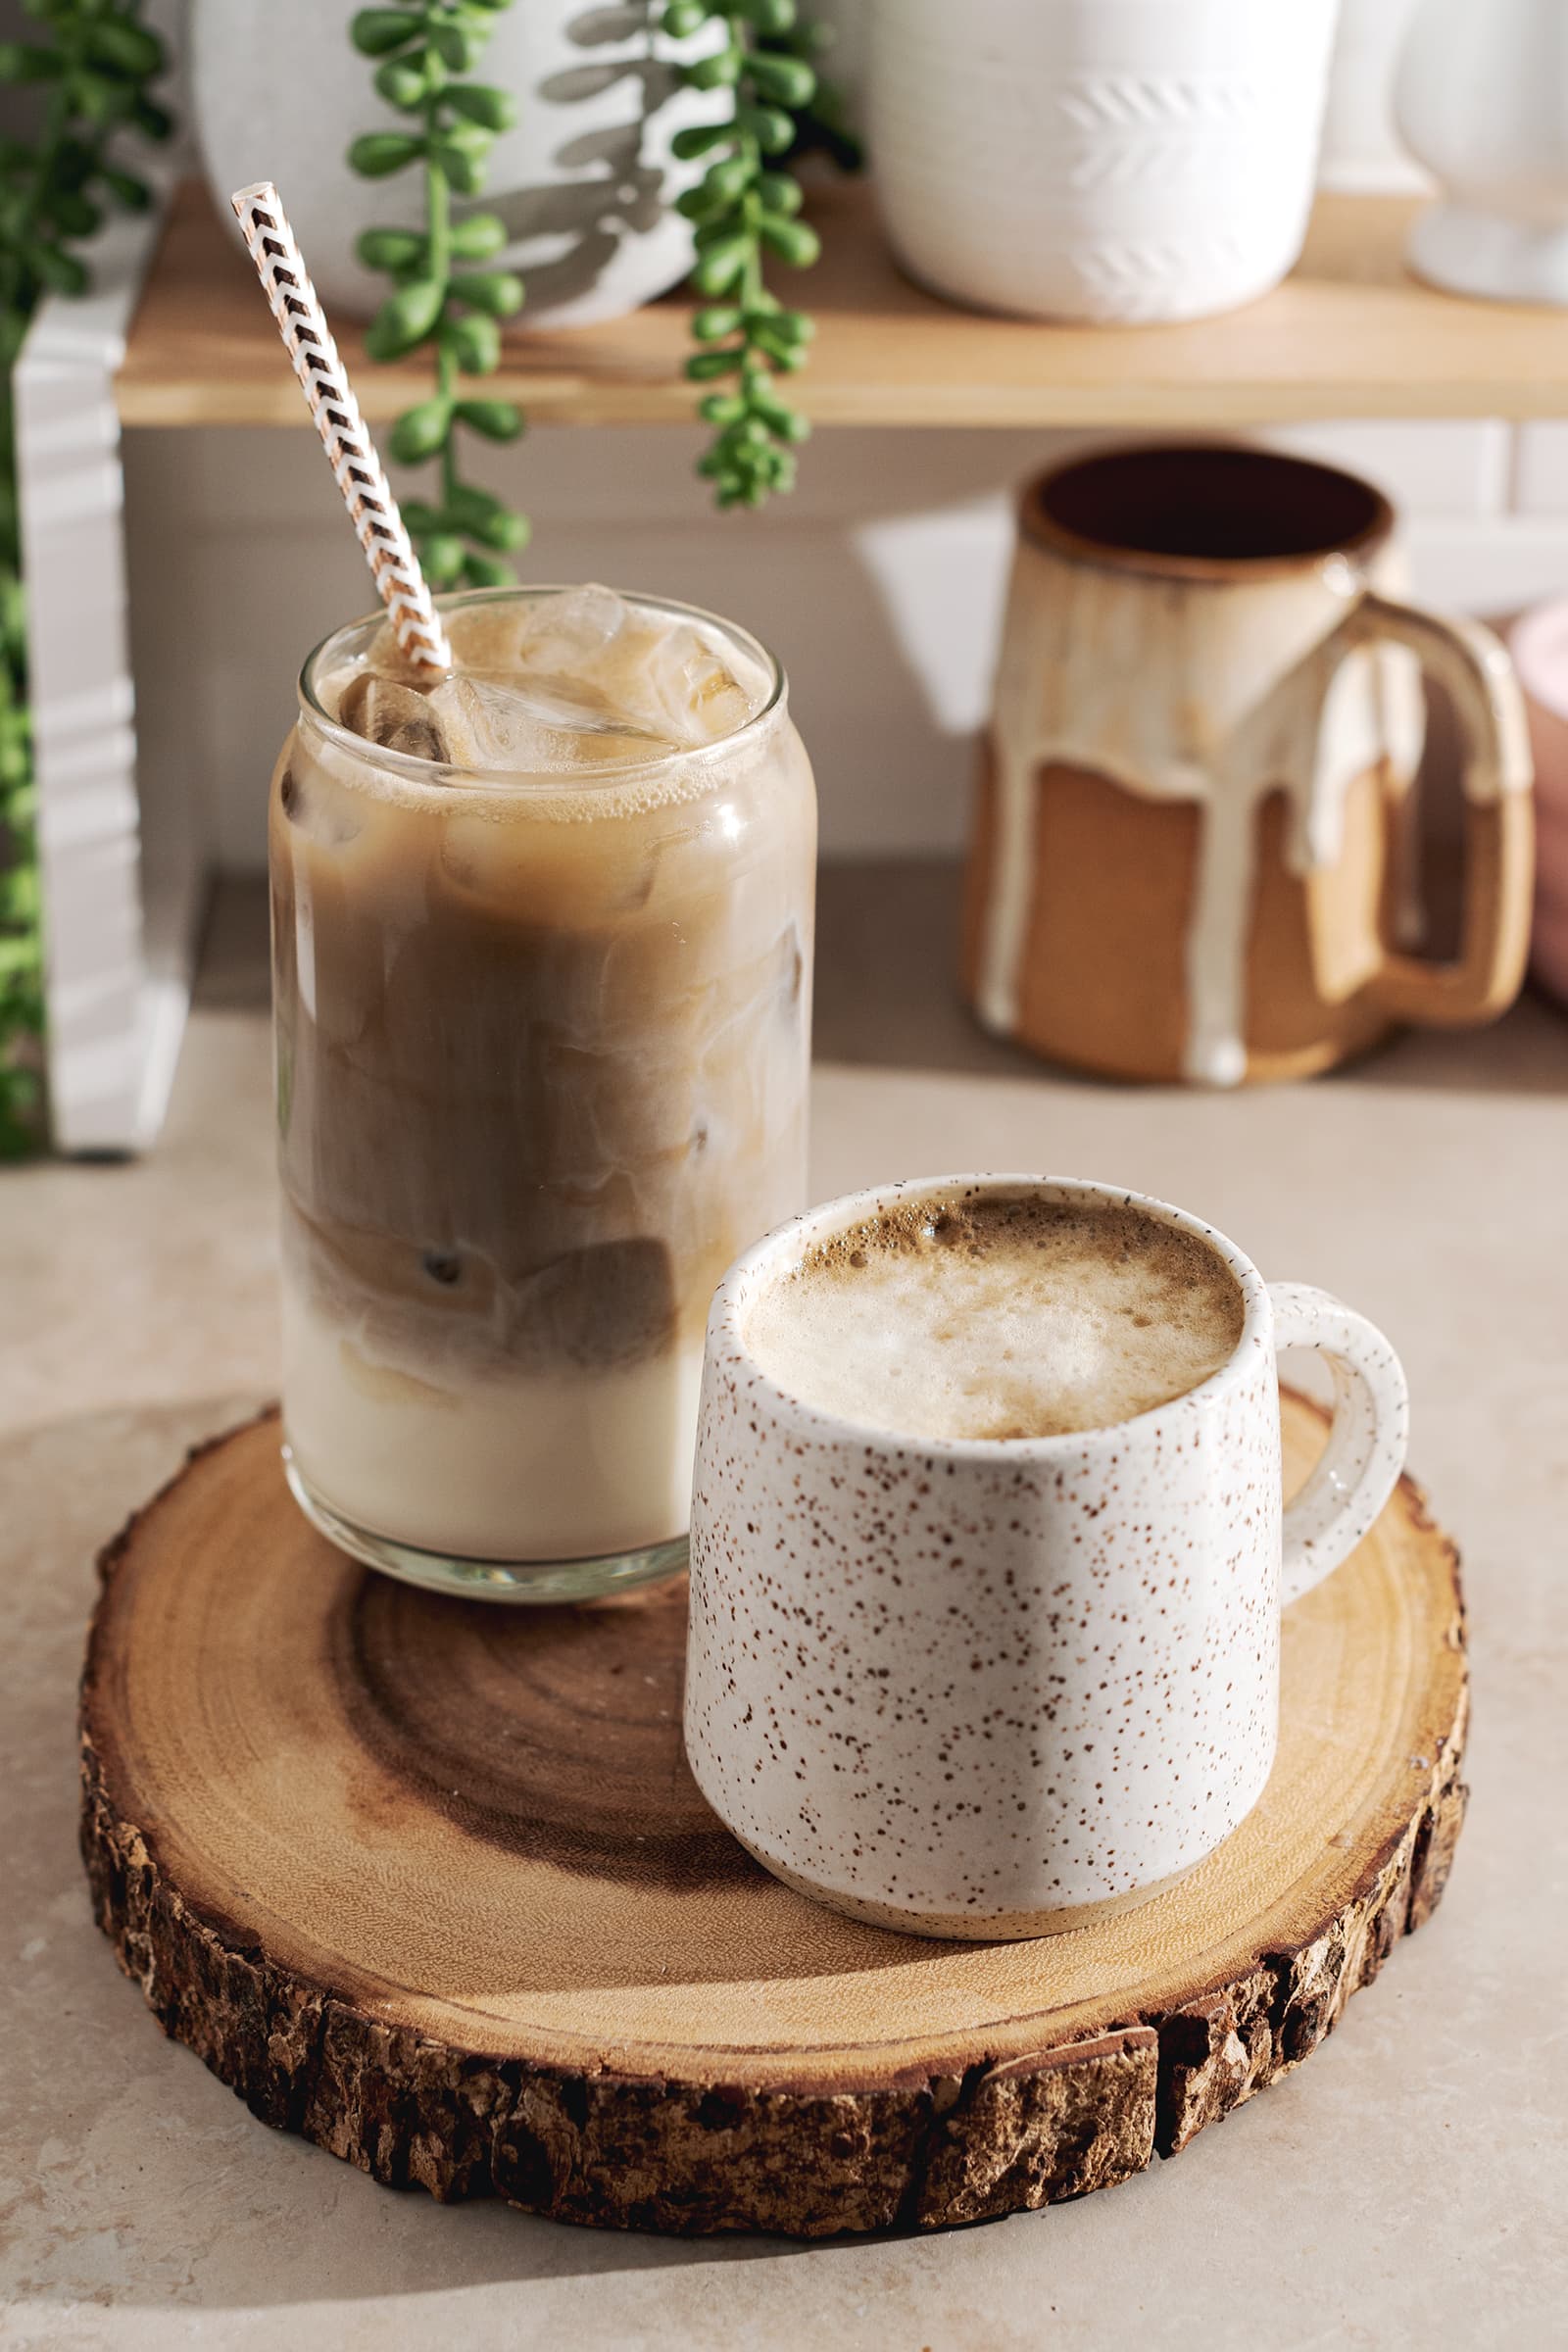 A glass of iced hojicha latte and a mug of hot hojicha latte sitting on wood platter.